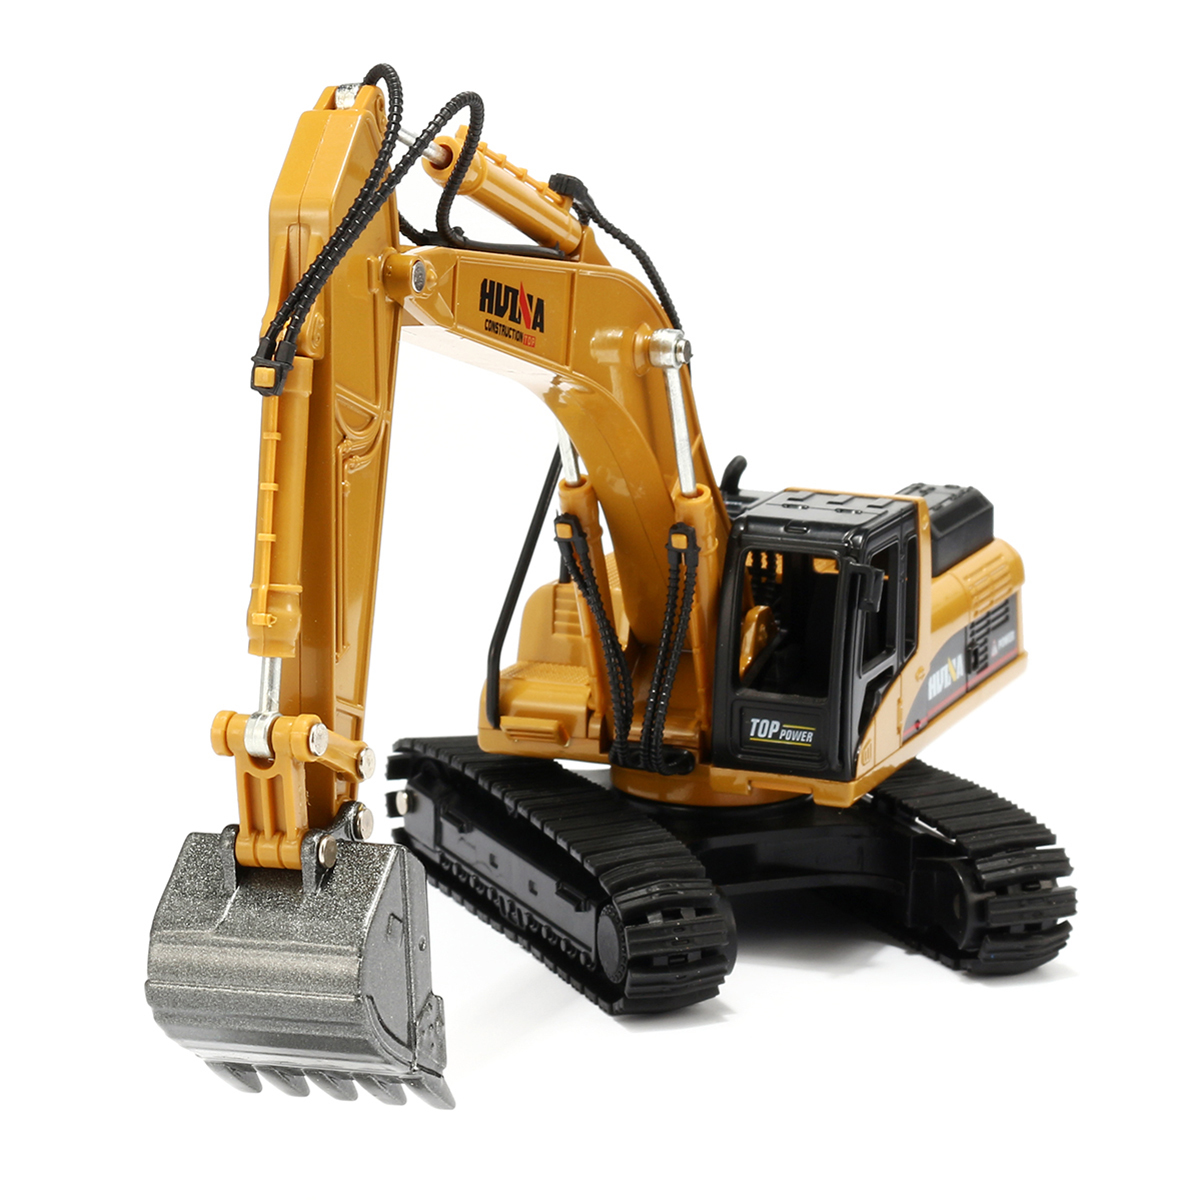 1:50 Alloy Excavator Toys Engineering Vehicle Diecast Model Metal Castings Vehicles 1